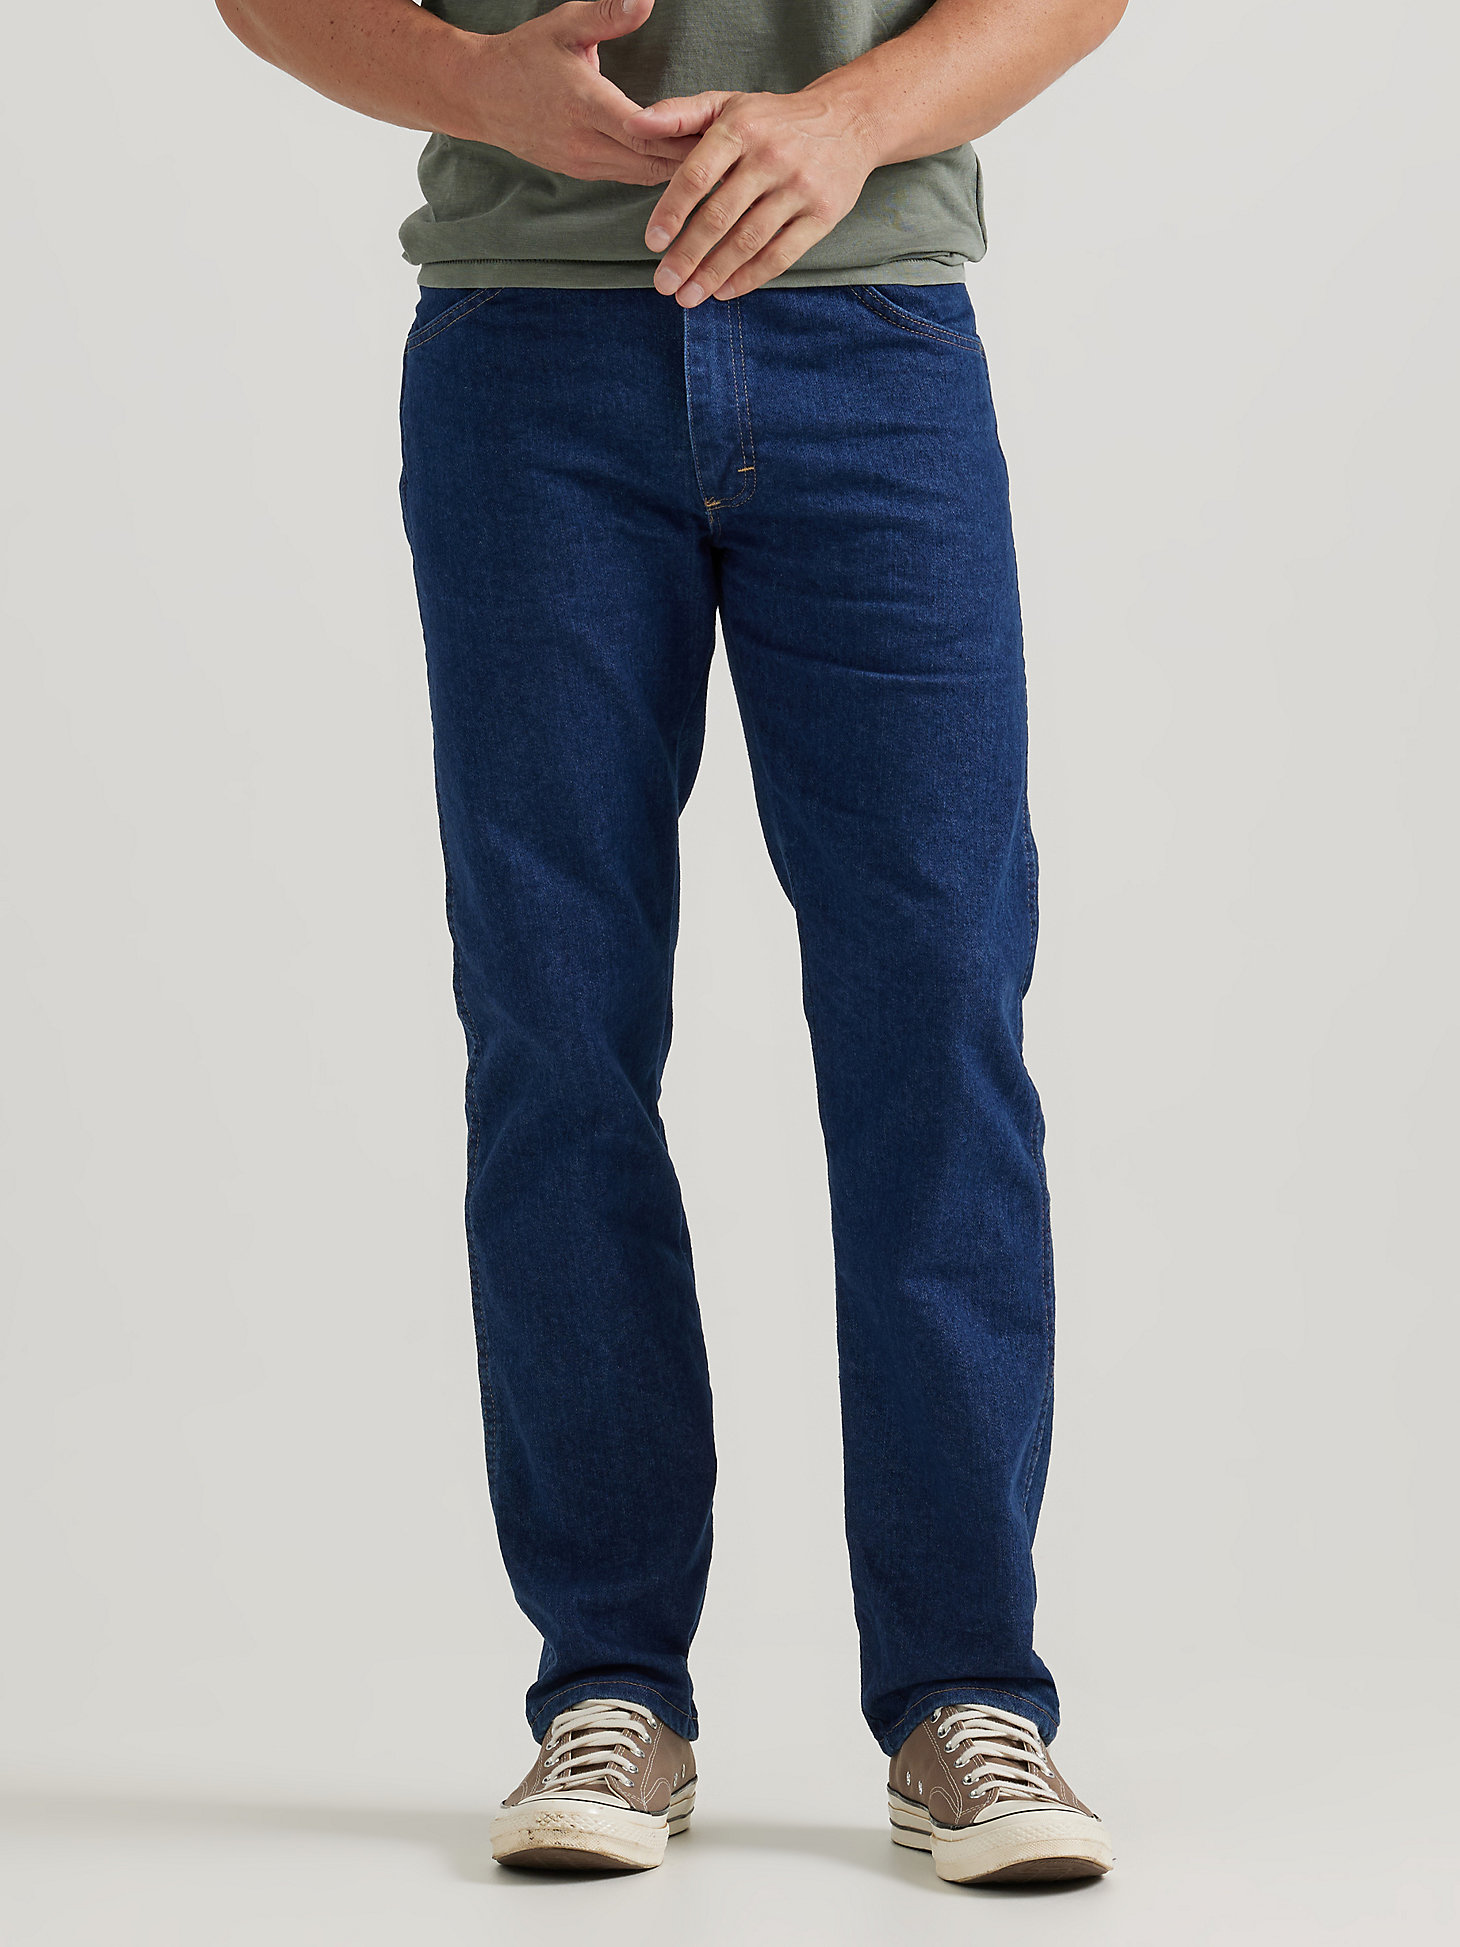 Top 59+ imagen wrangler stretch jeans men’s